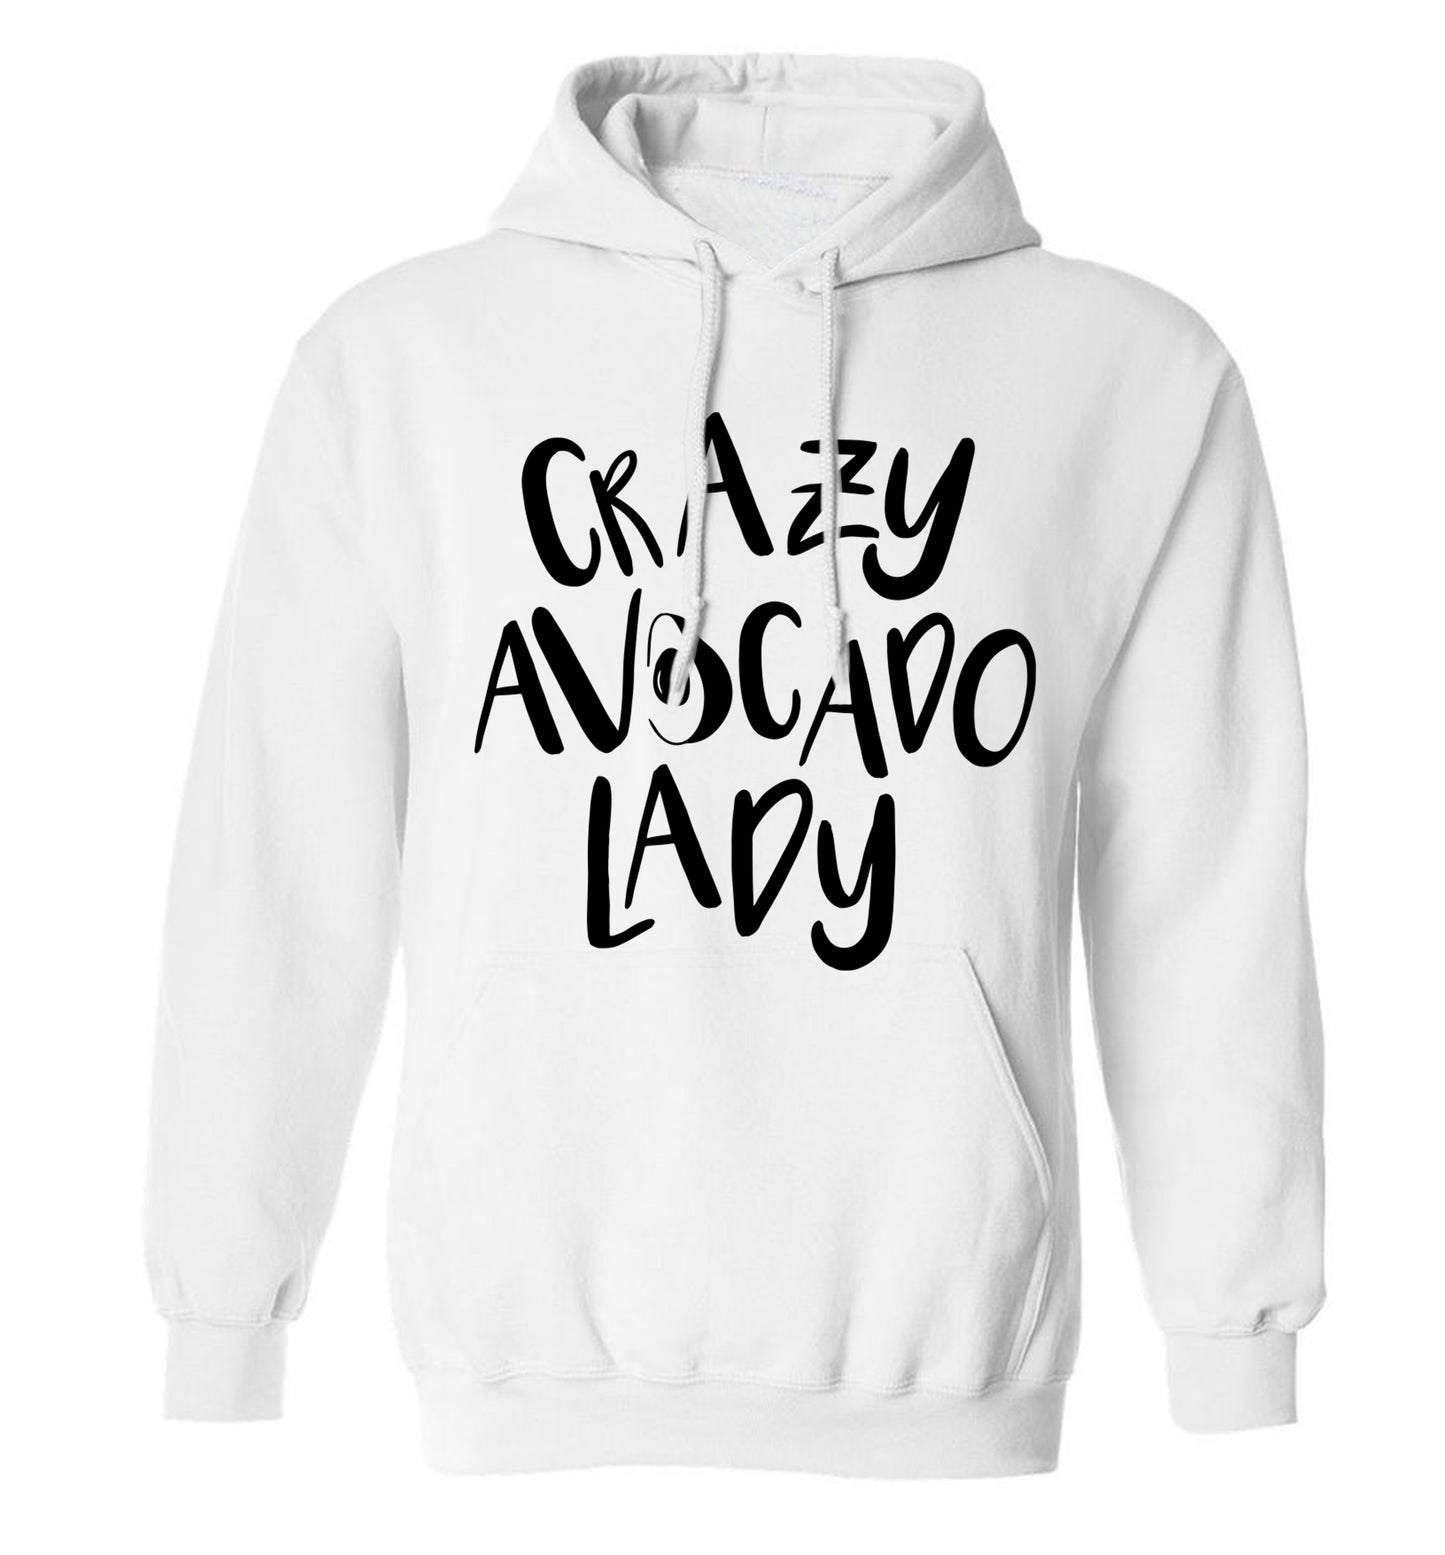 Crazy avocado lady adults unisex white hoodie 2XL